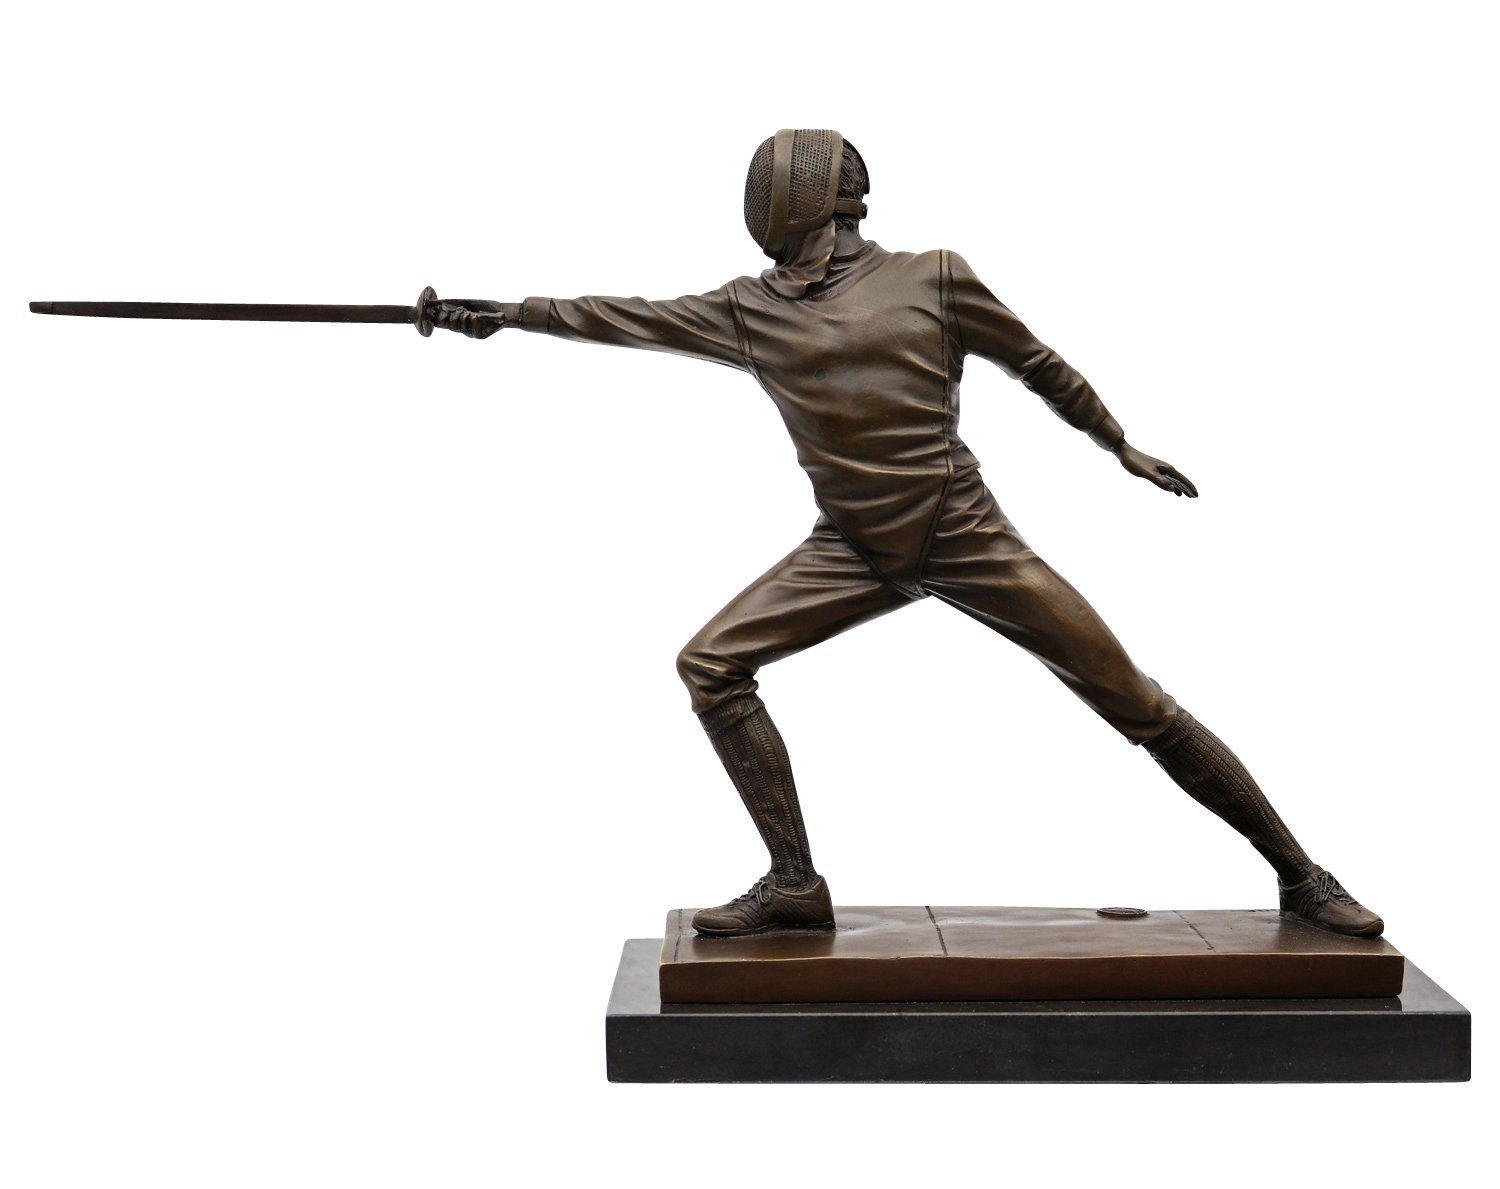 Aubaho Skulptur Bronzeskulptur Fechter Sport im Antik-Stil Bronze Figur Statue 44cm